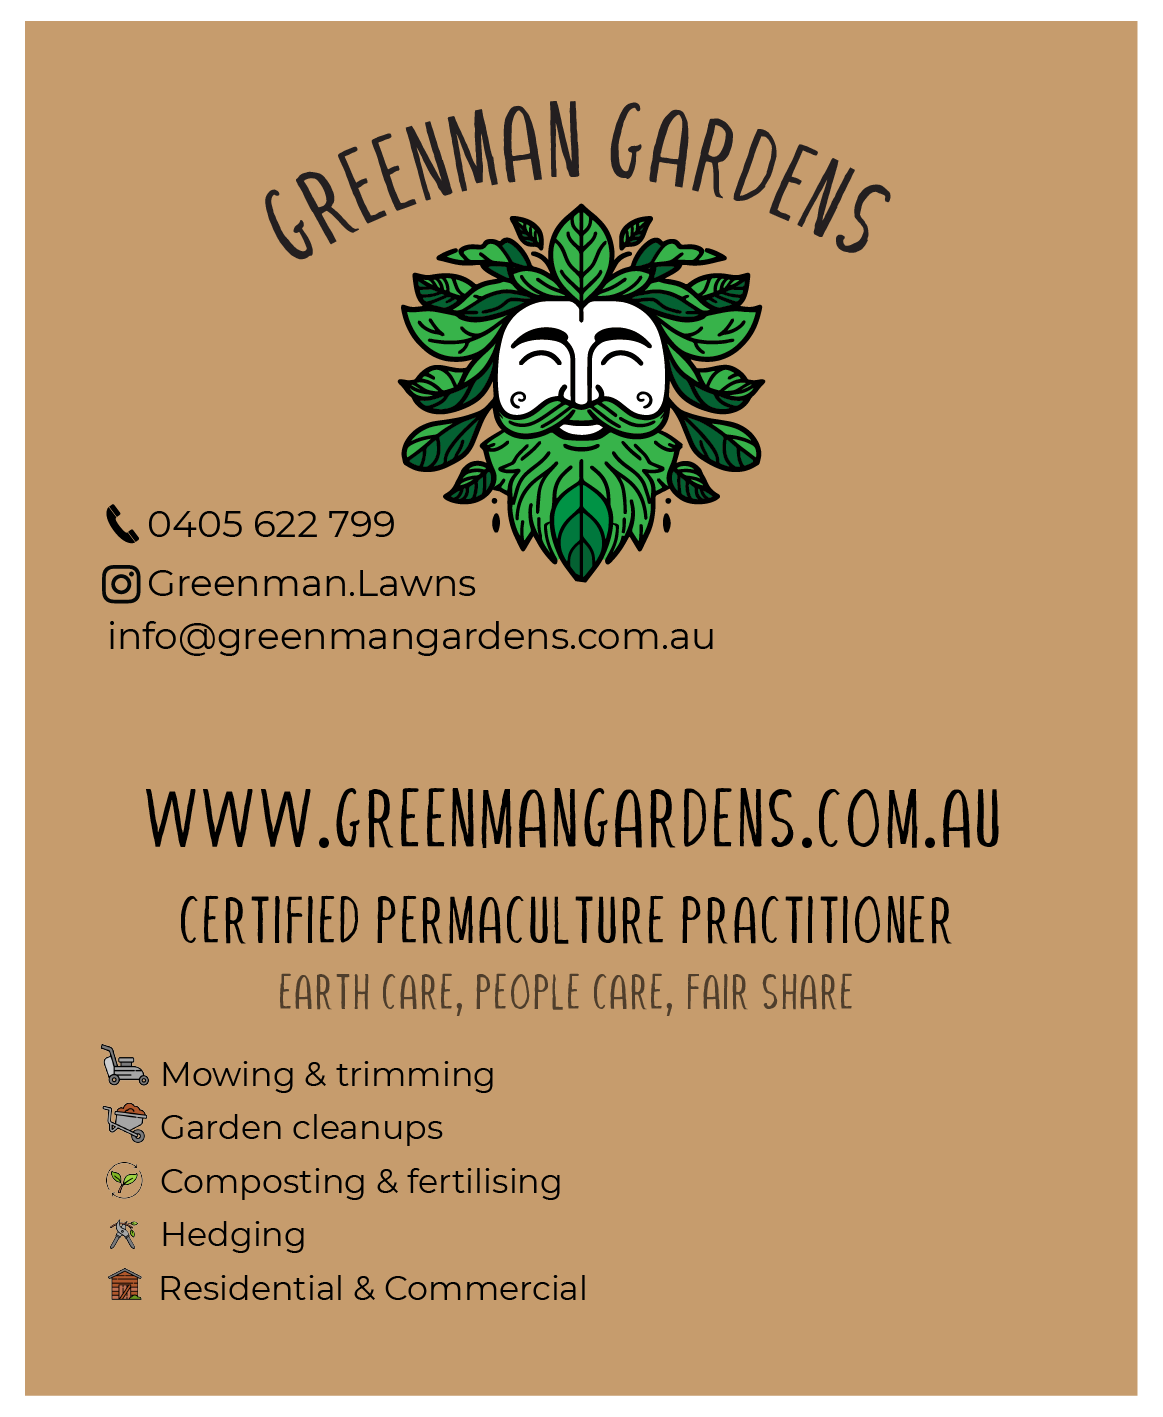 Greenman Gardens digital business card